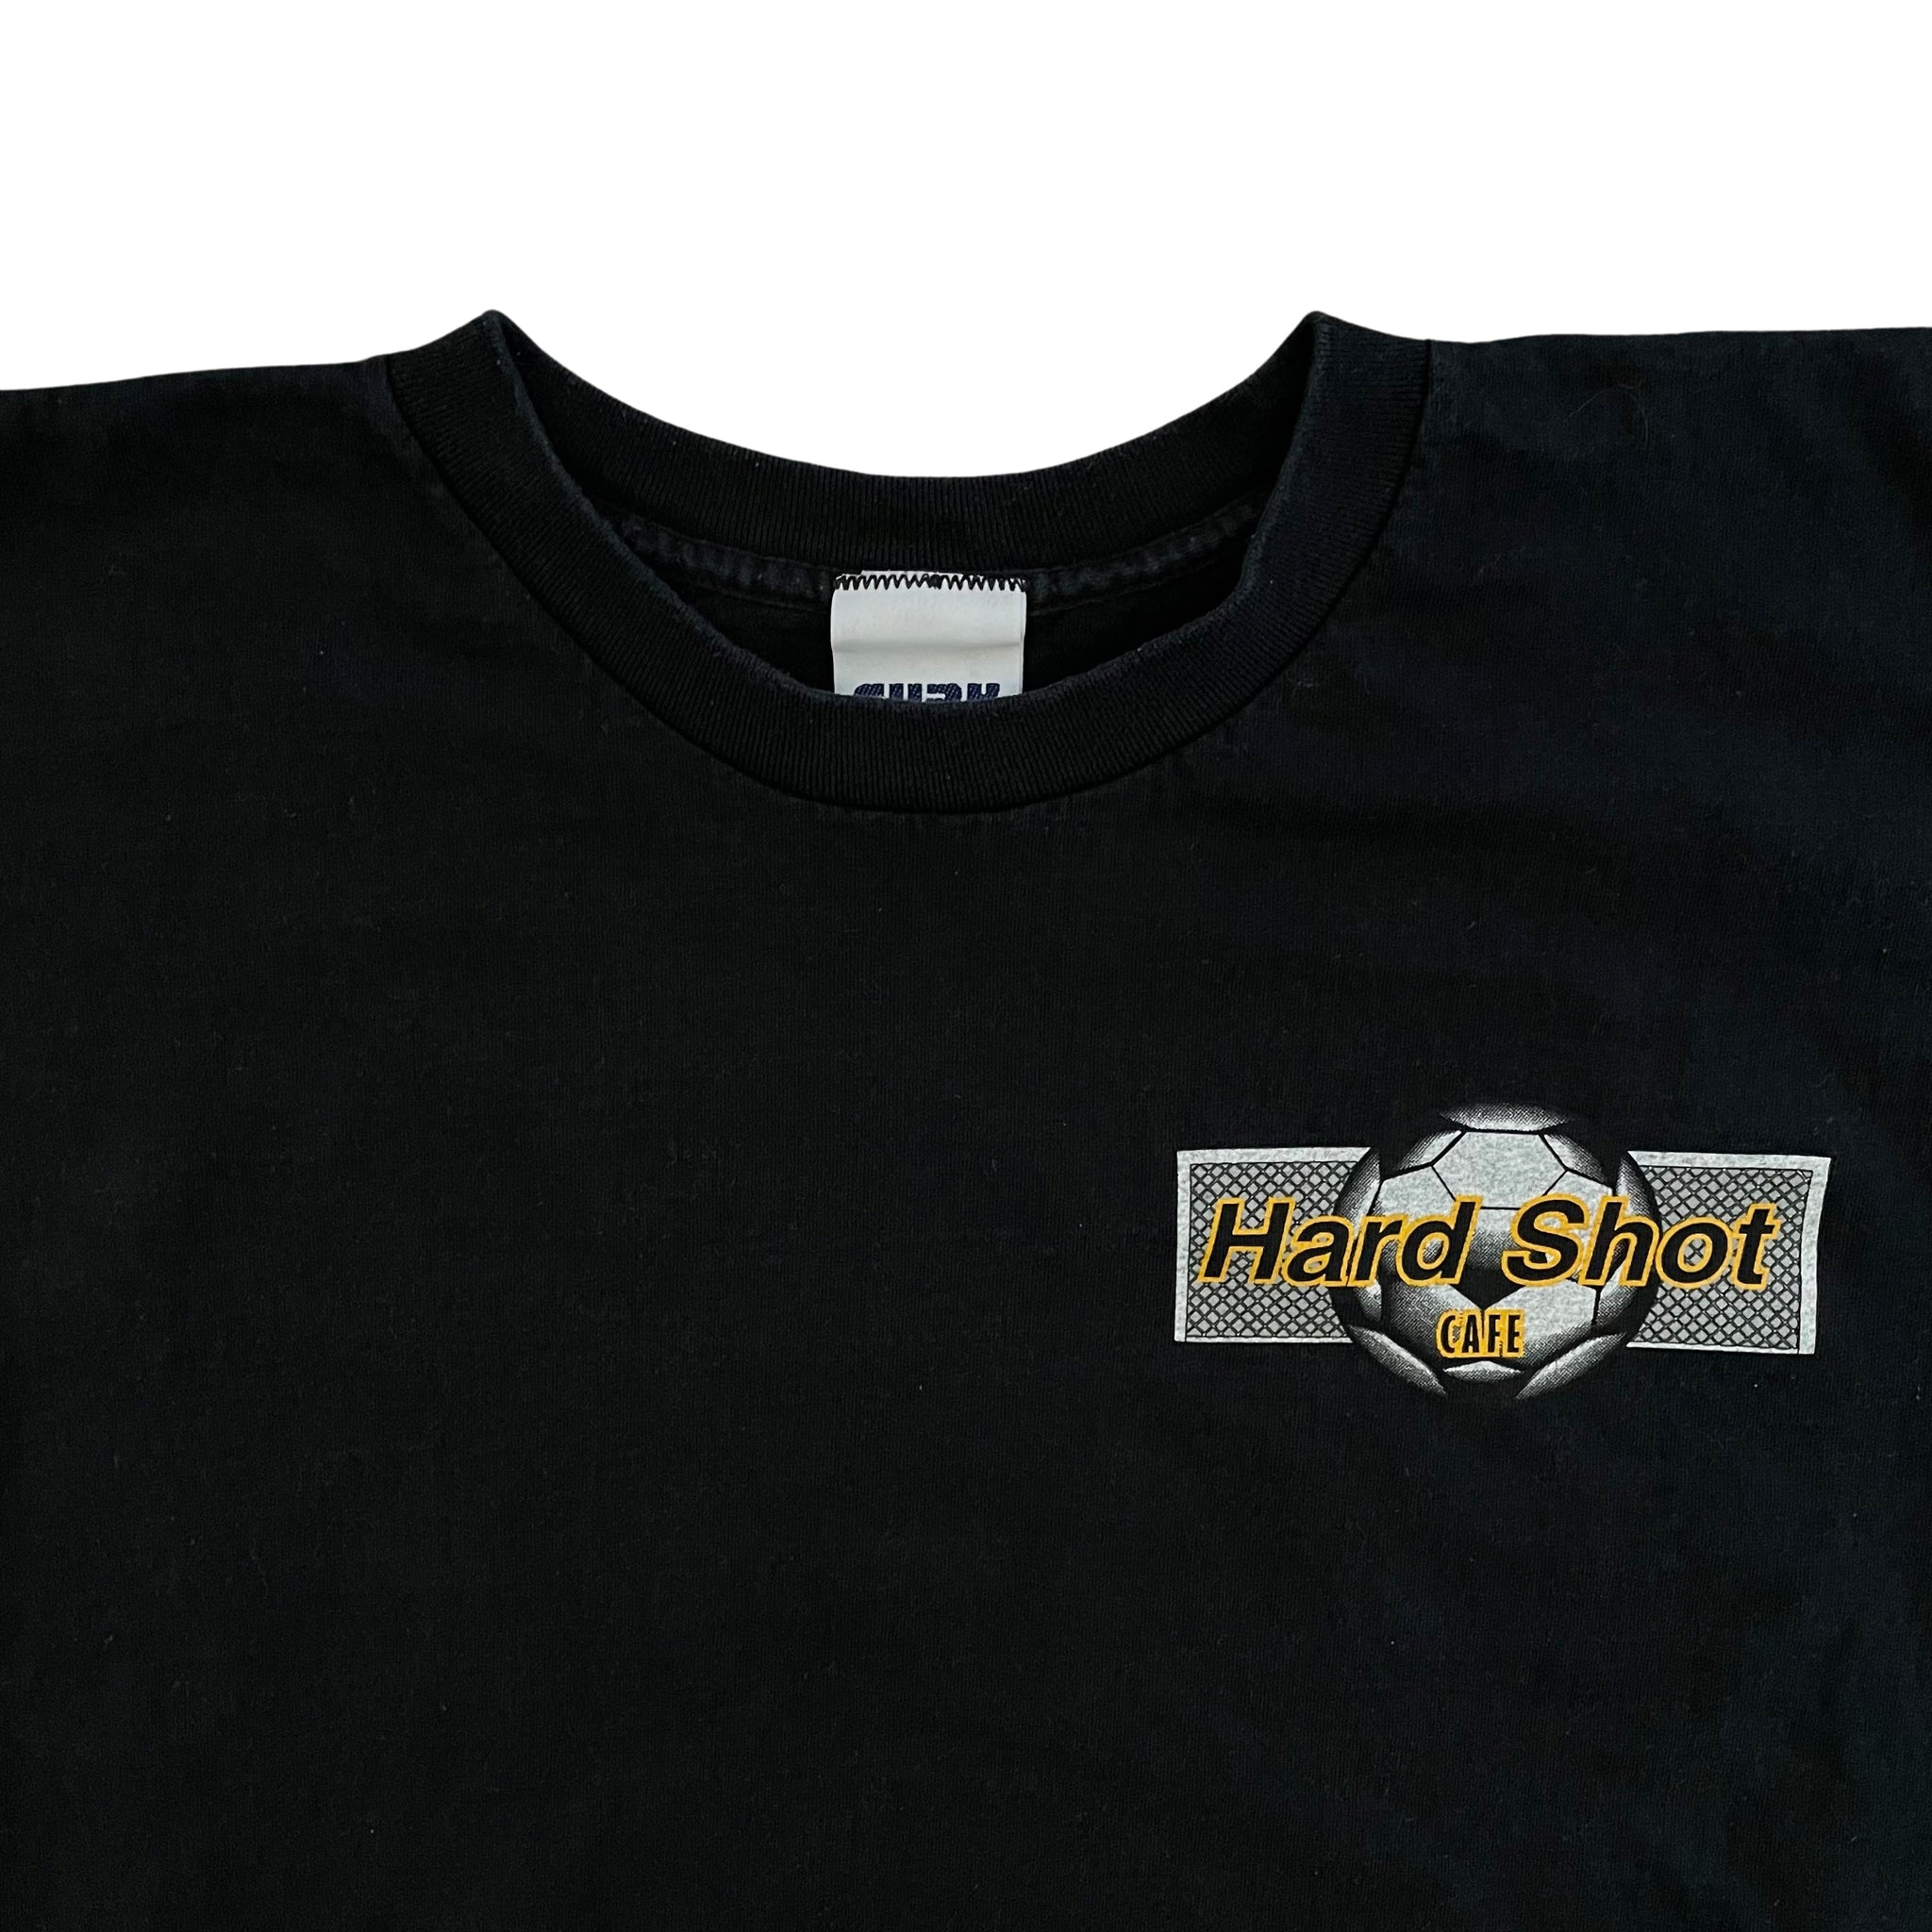 Hard Shot Cafe T-Shirt - L